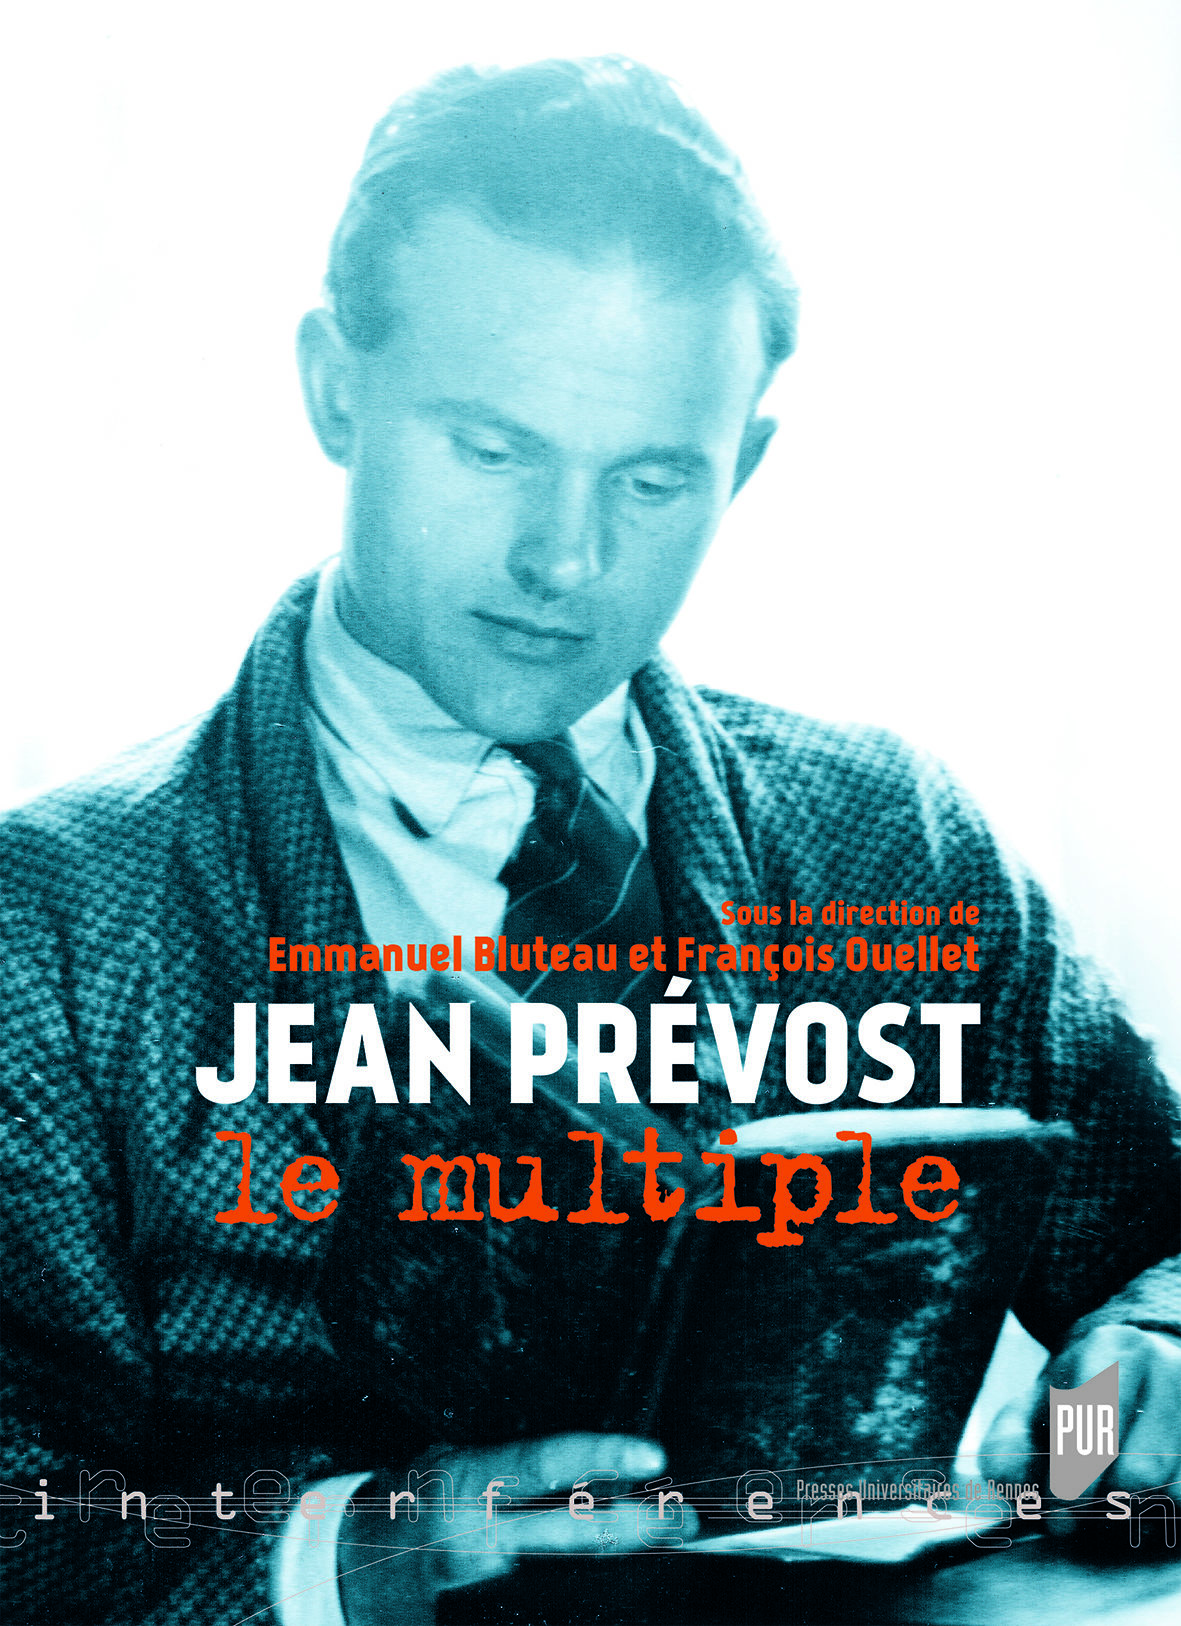 Jean Prvost 001